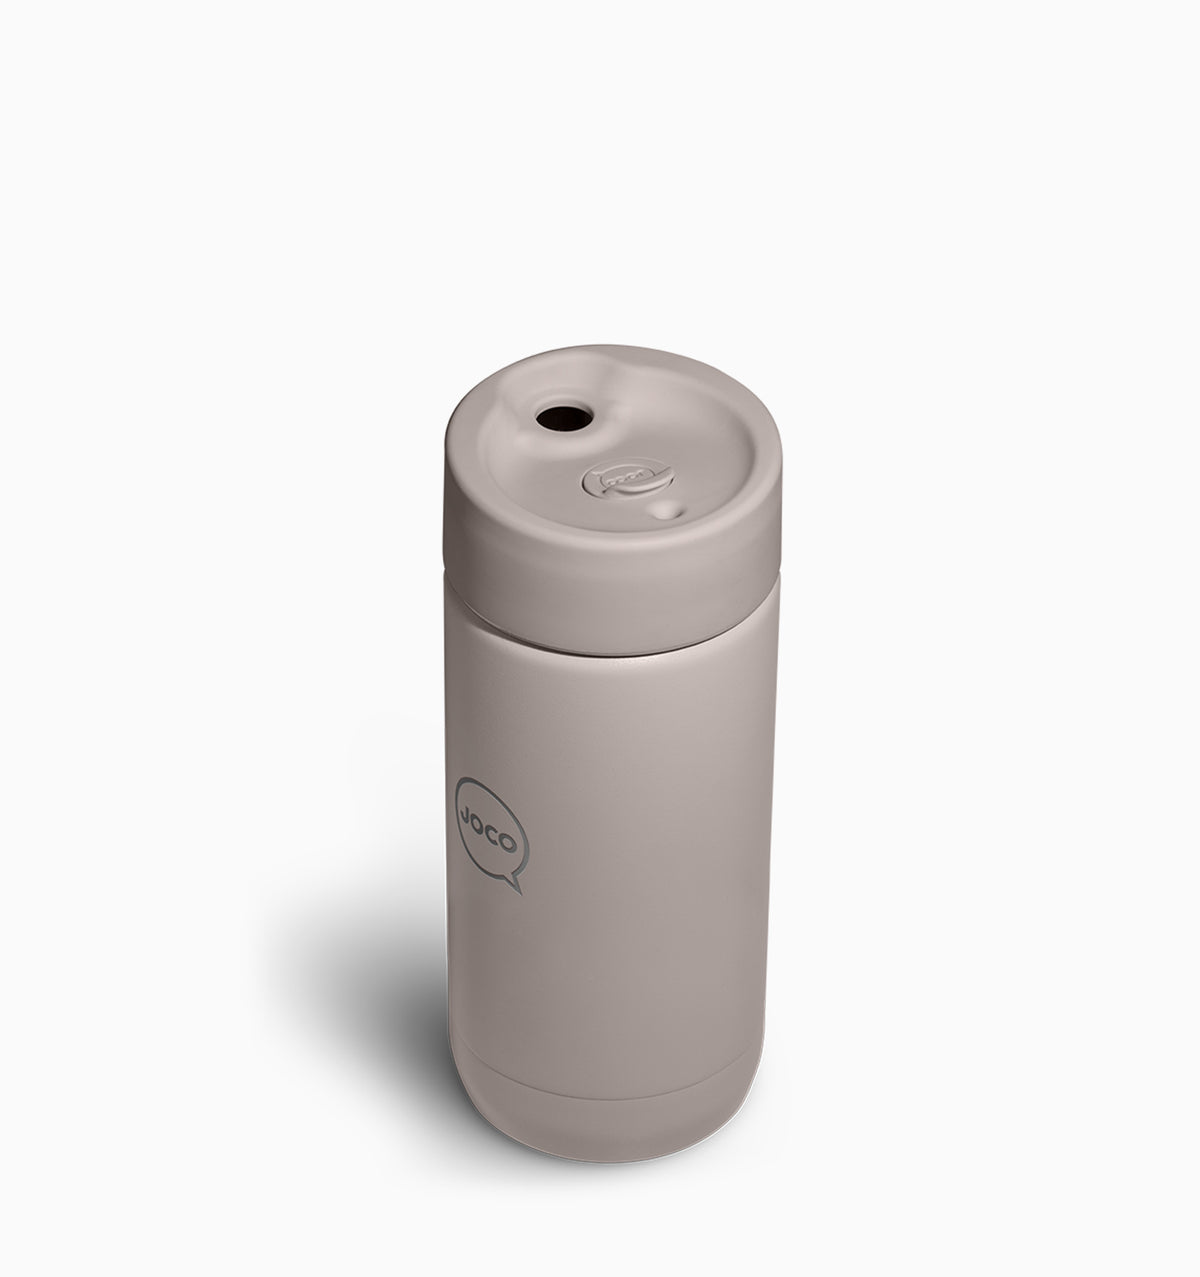 Joco 454ml (16oz) Active Flask Insulated - Sandstone